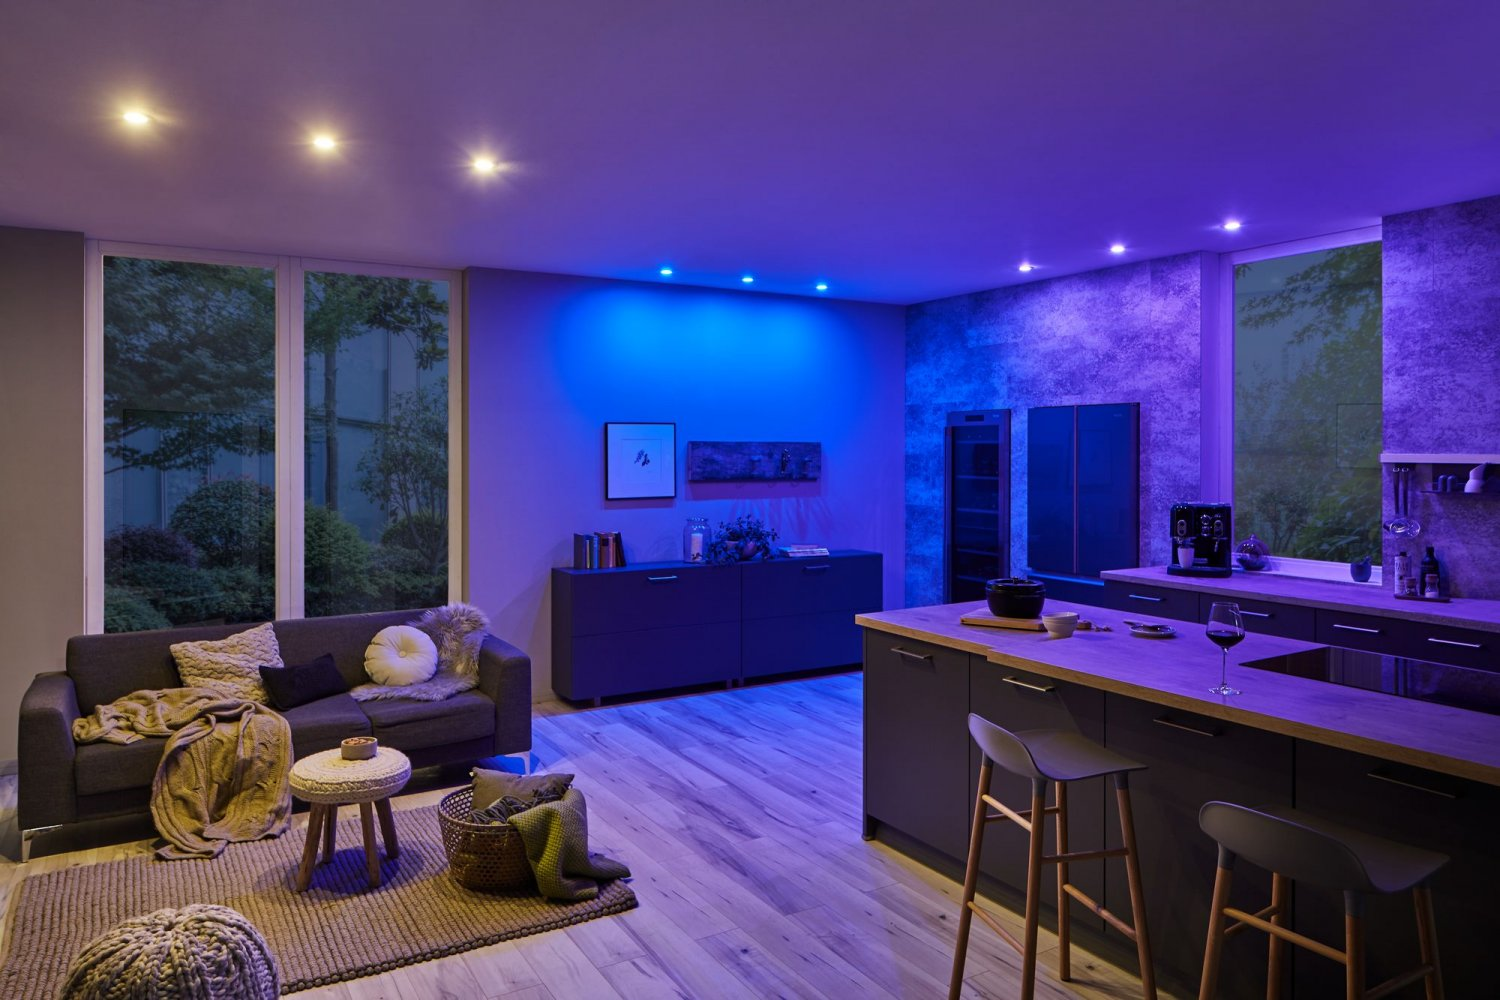 Home Einbauleuchte LICHT Nova PAULMANN Zigbee Smart RGBW Farbwechsel Plus LED